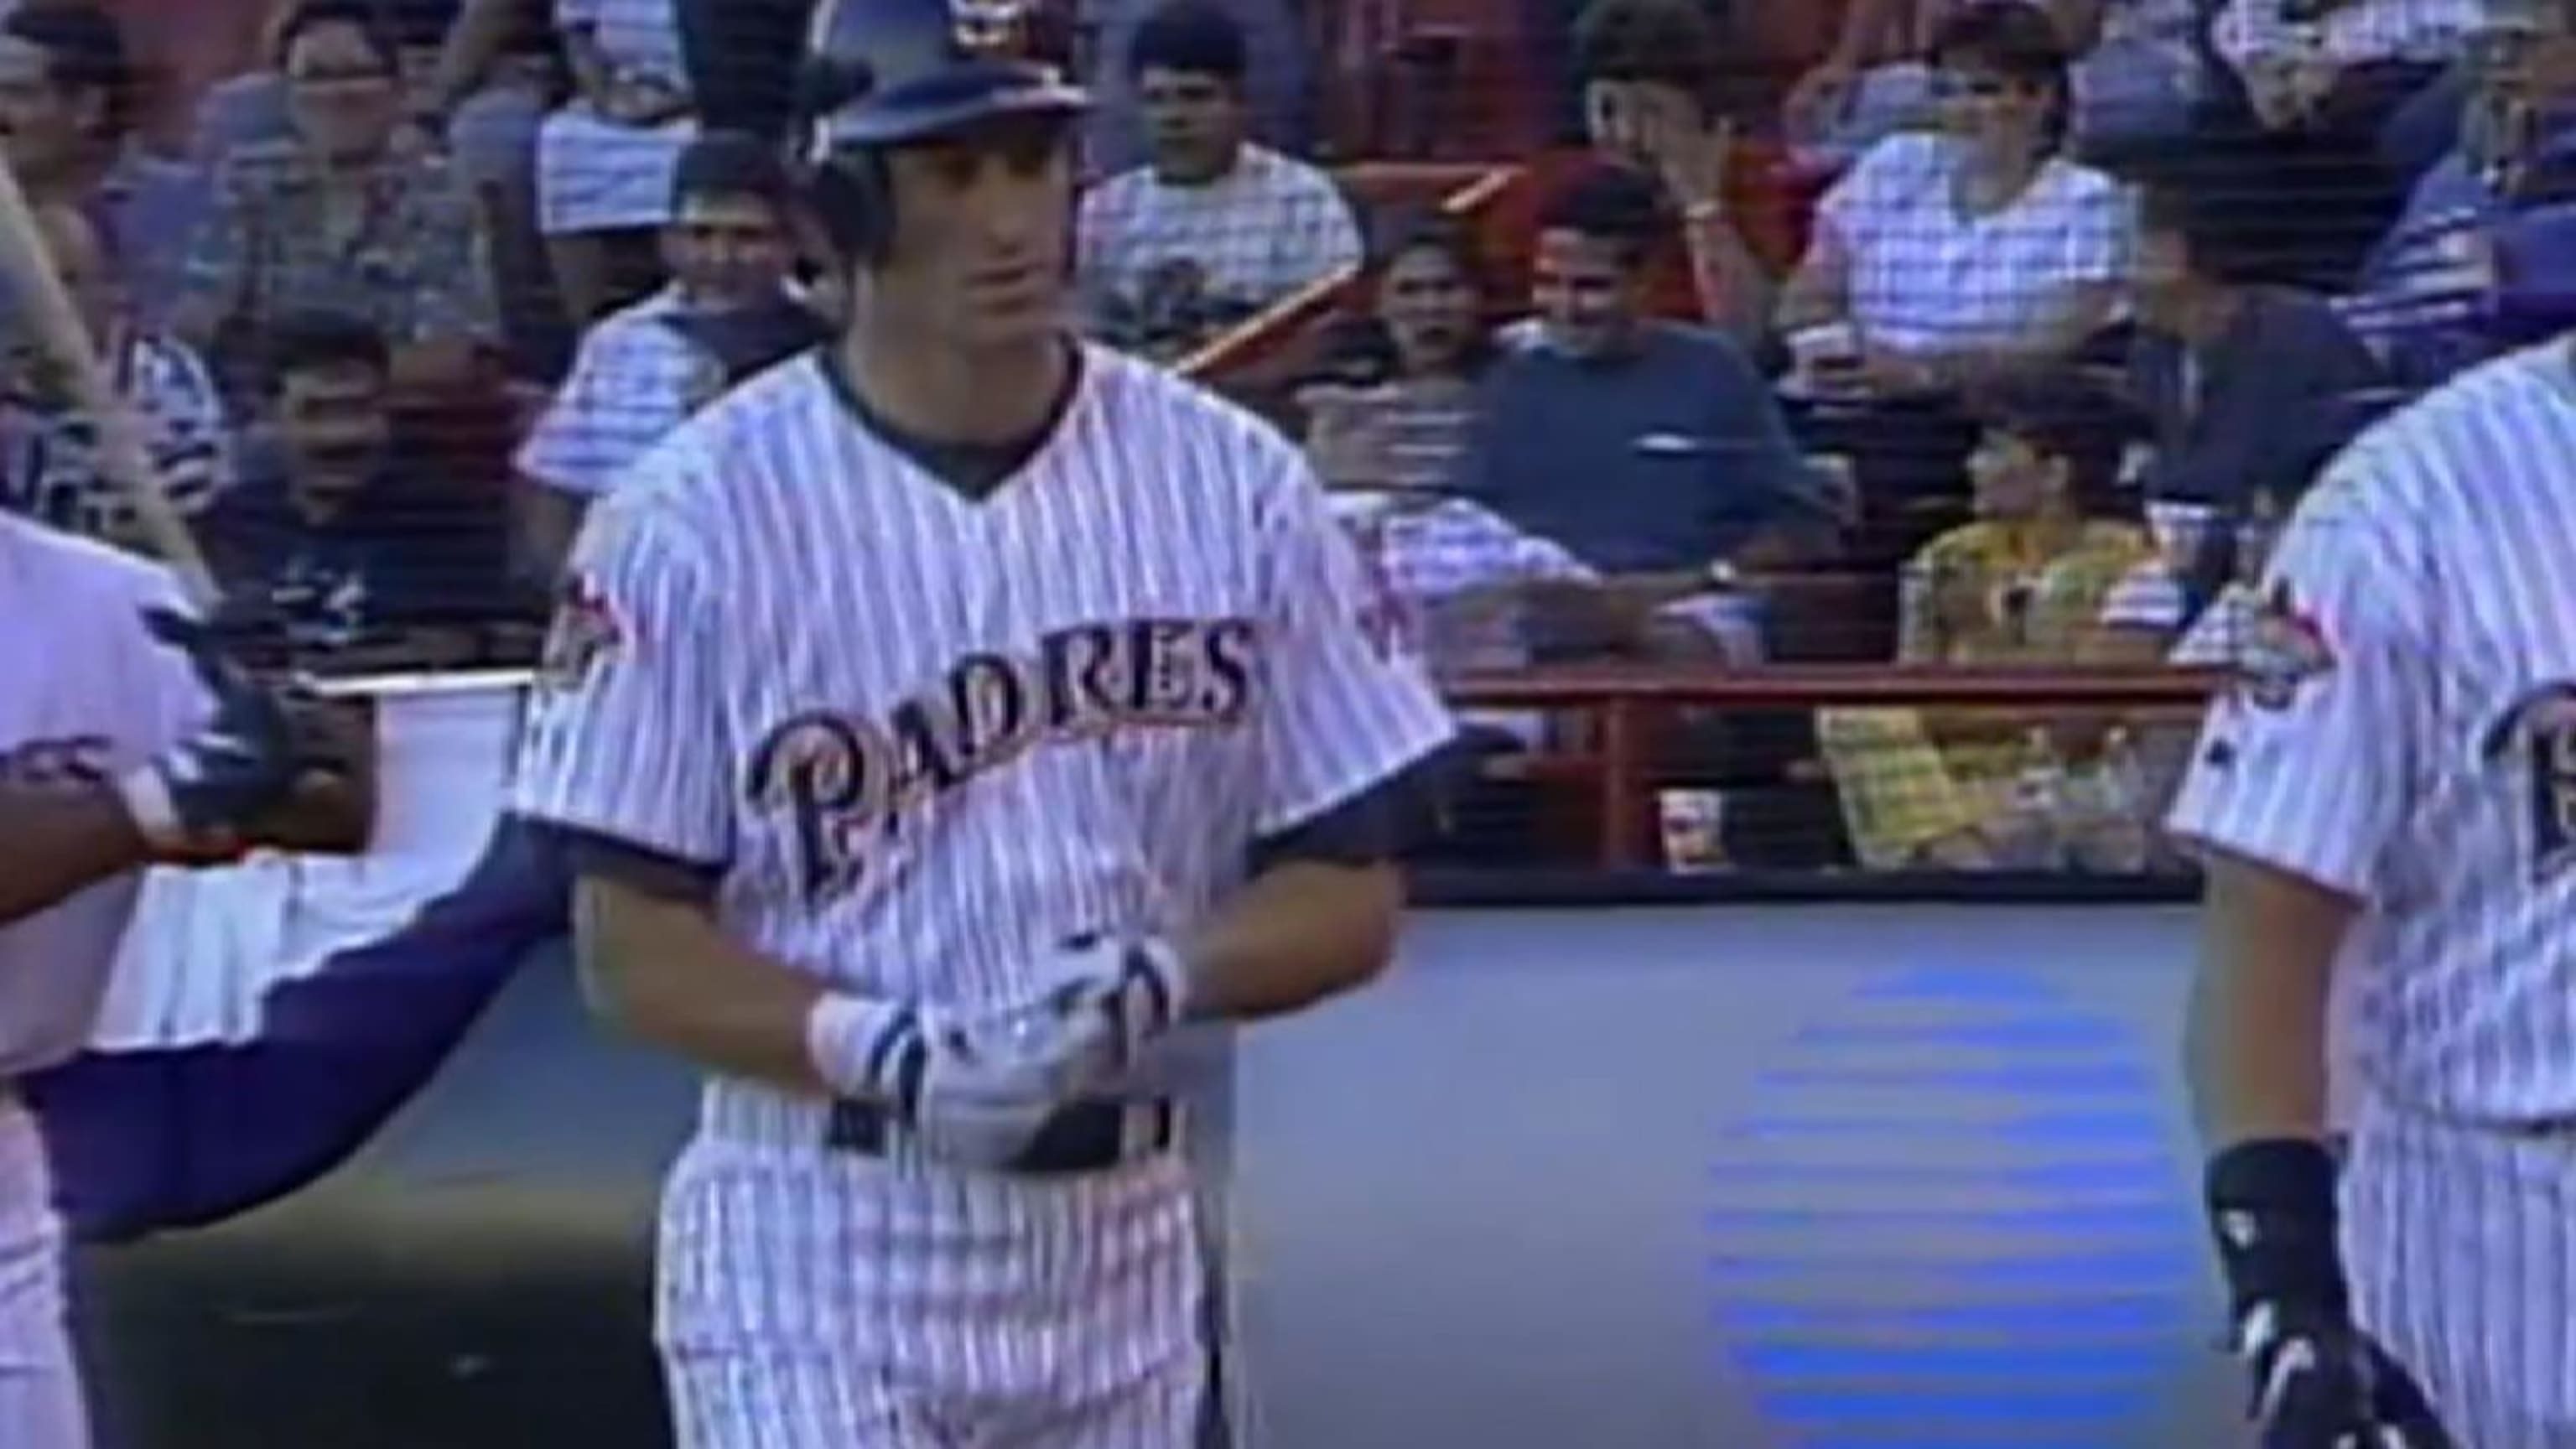 Fernando Valenzuela San Diego Padres 1996 Home Baseball 